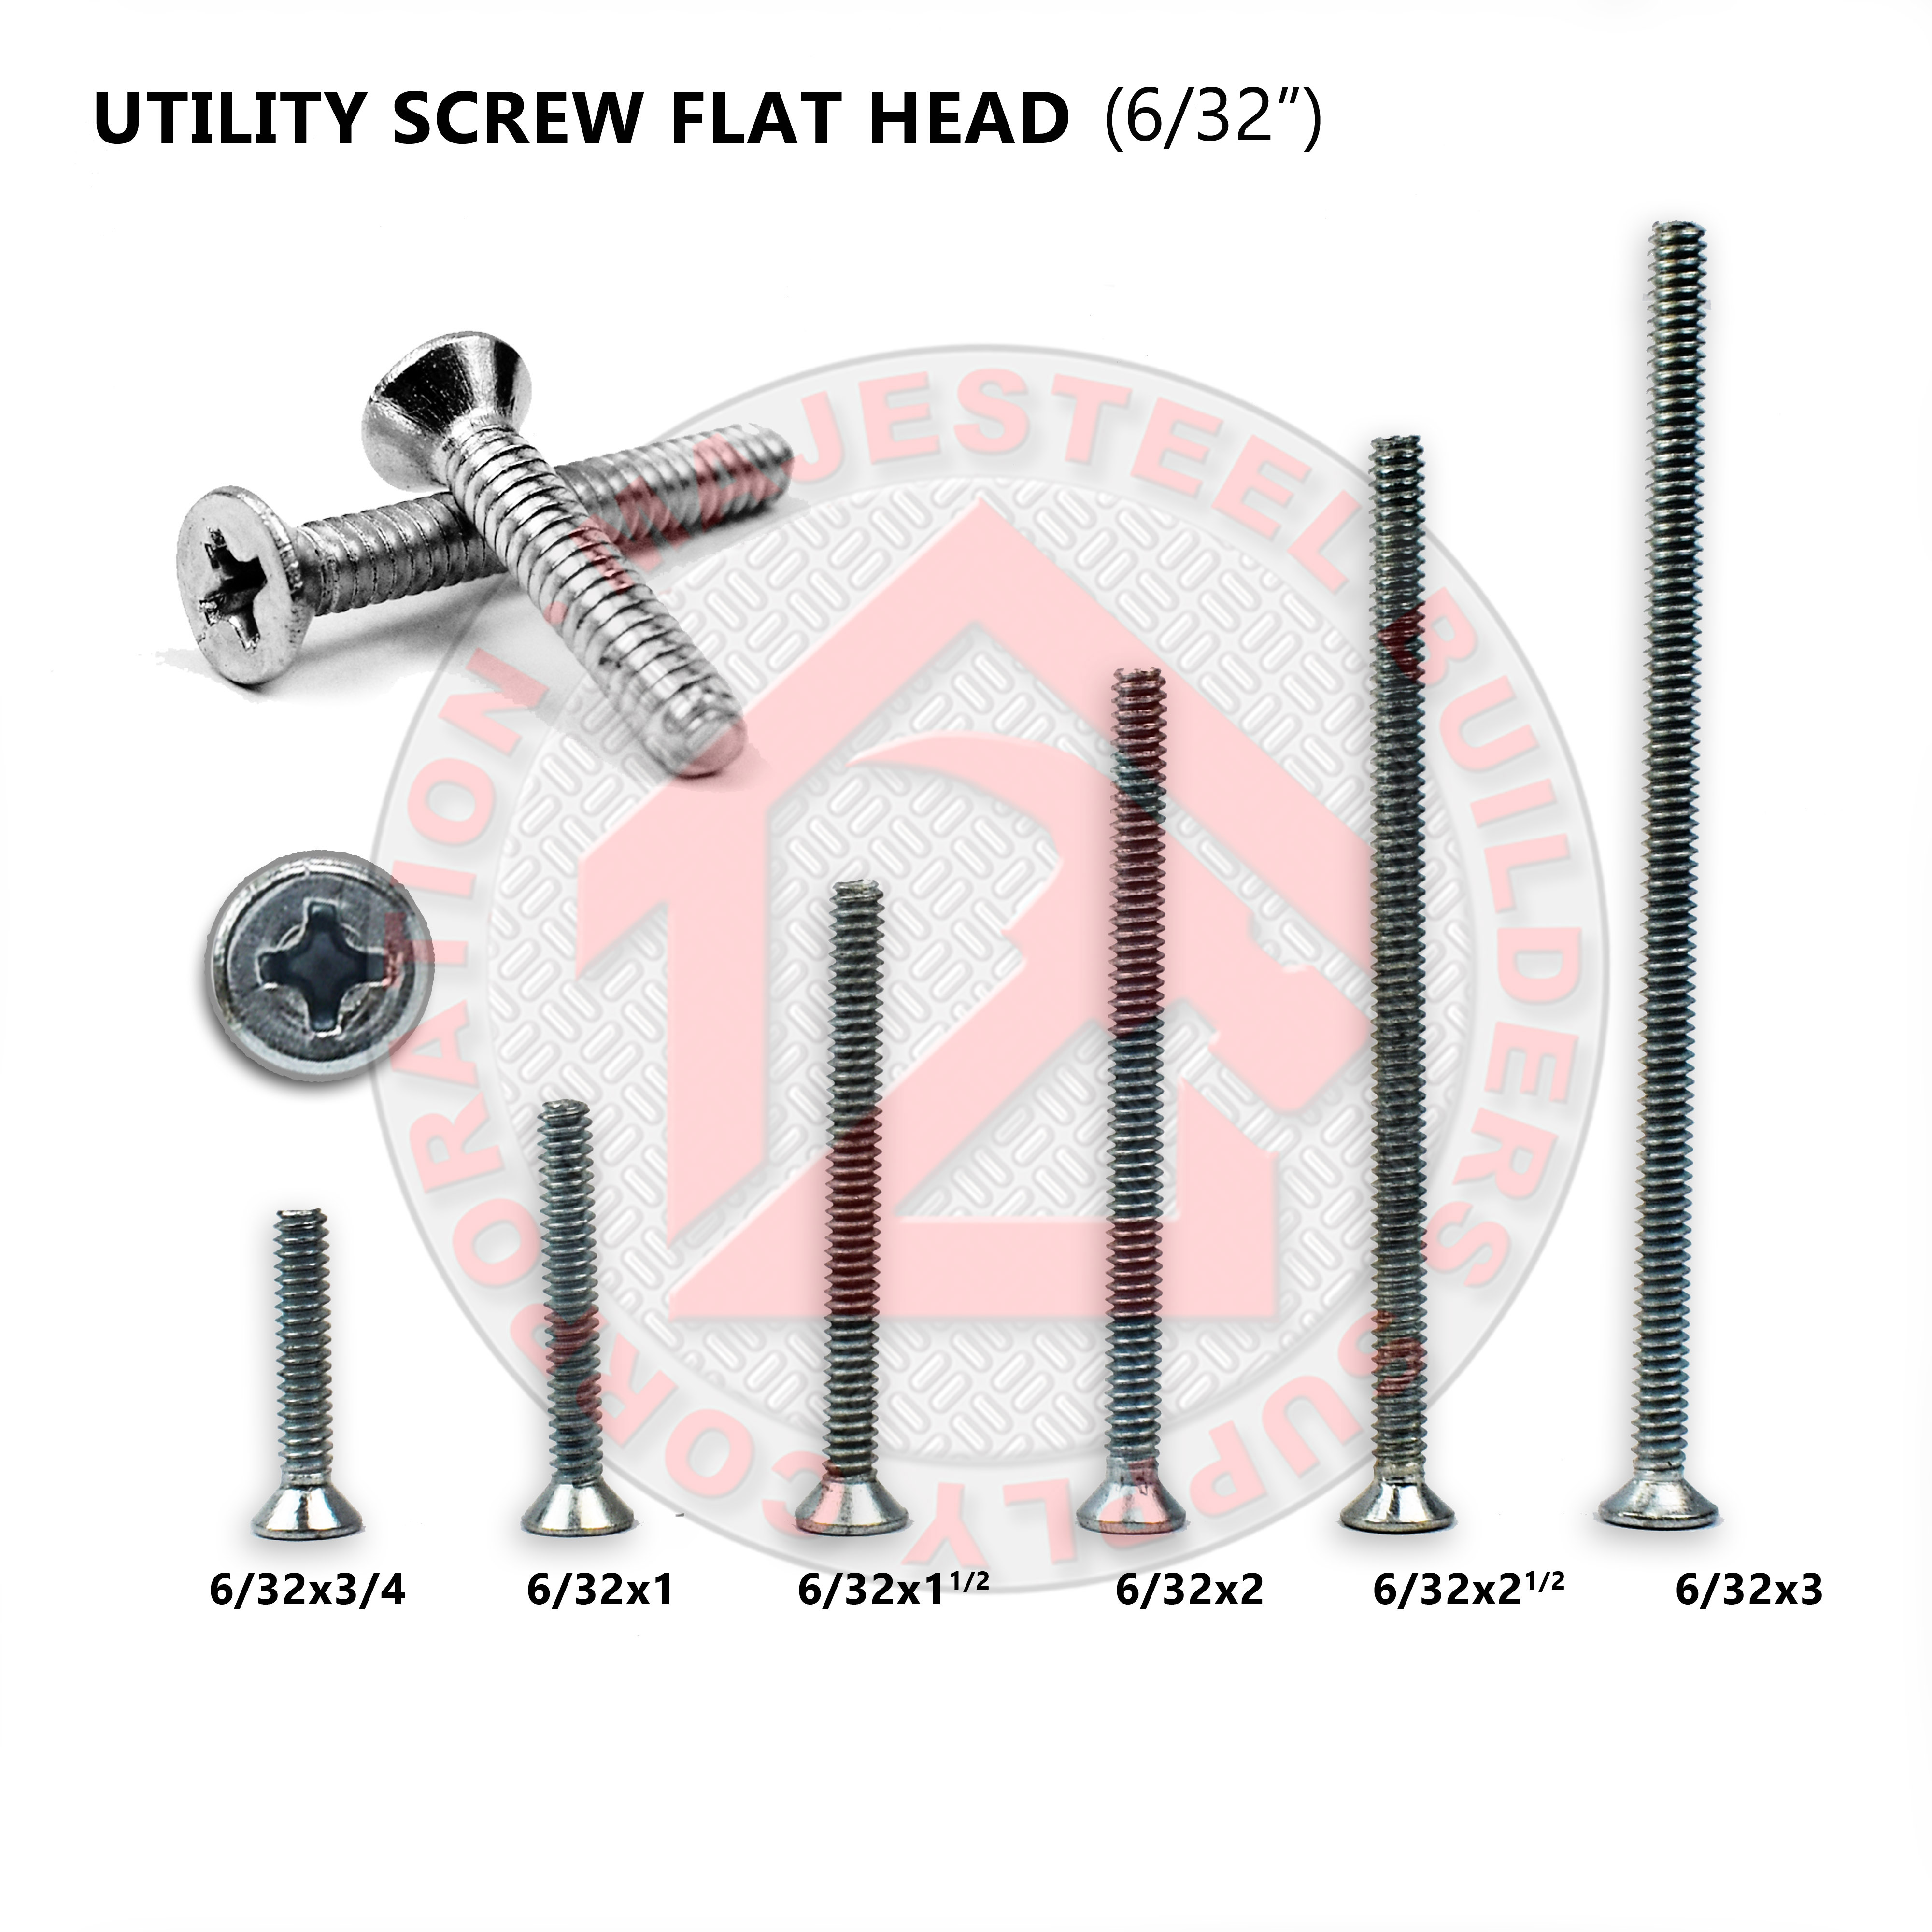 100pcs) Flat Head Utility Box Screw 6/32'', Junction Box Screw (Majesteel)